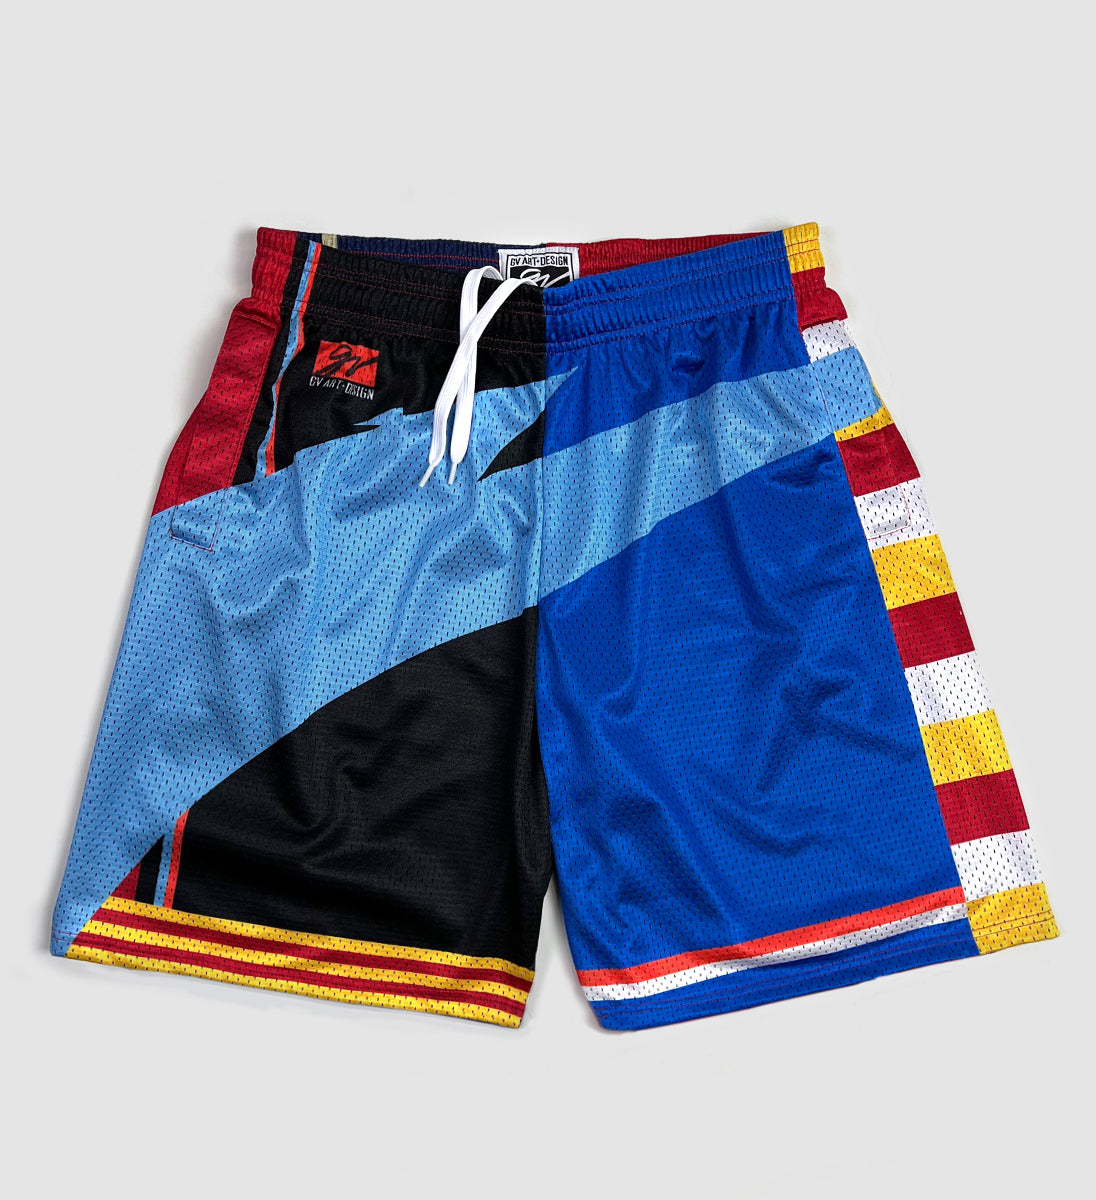 Vintage NBA Brand Basketball Shorts Men's Size Small Navy Blue